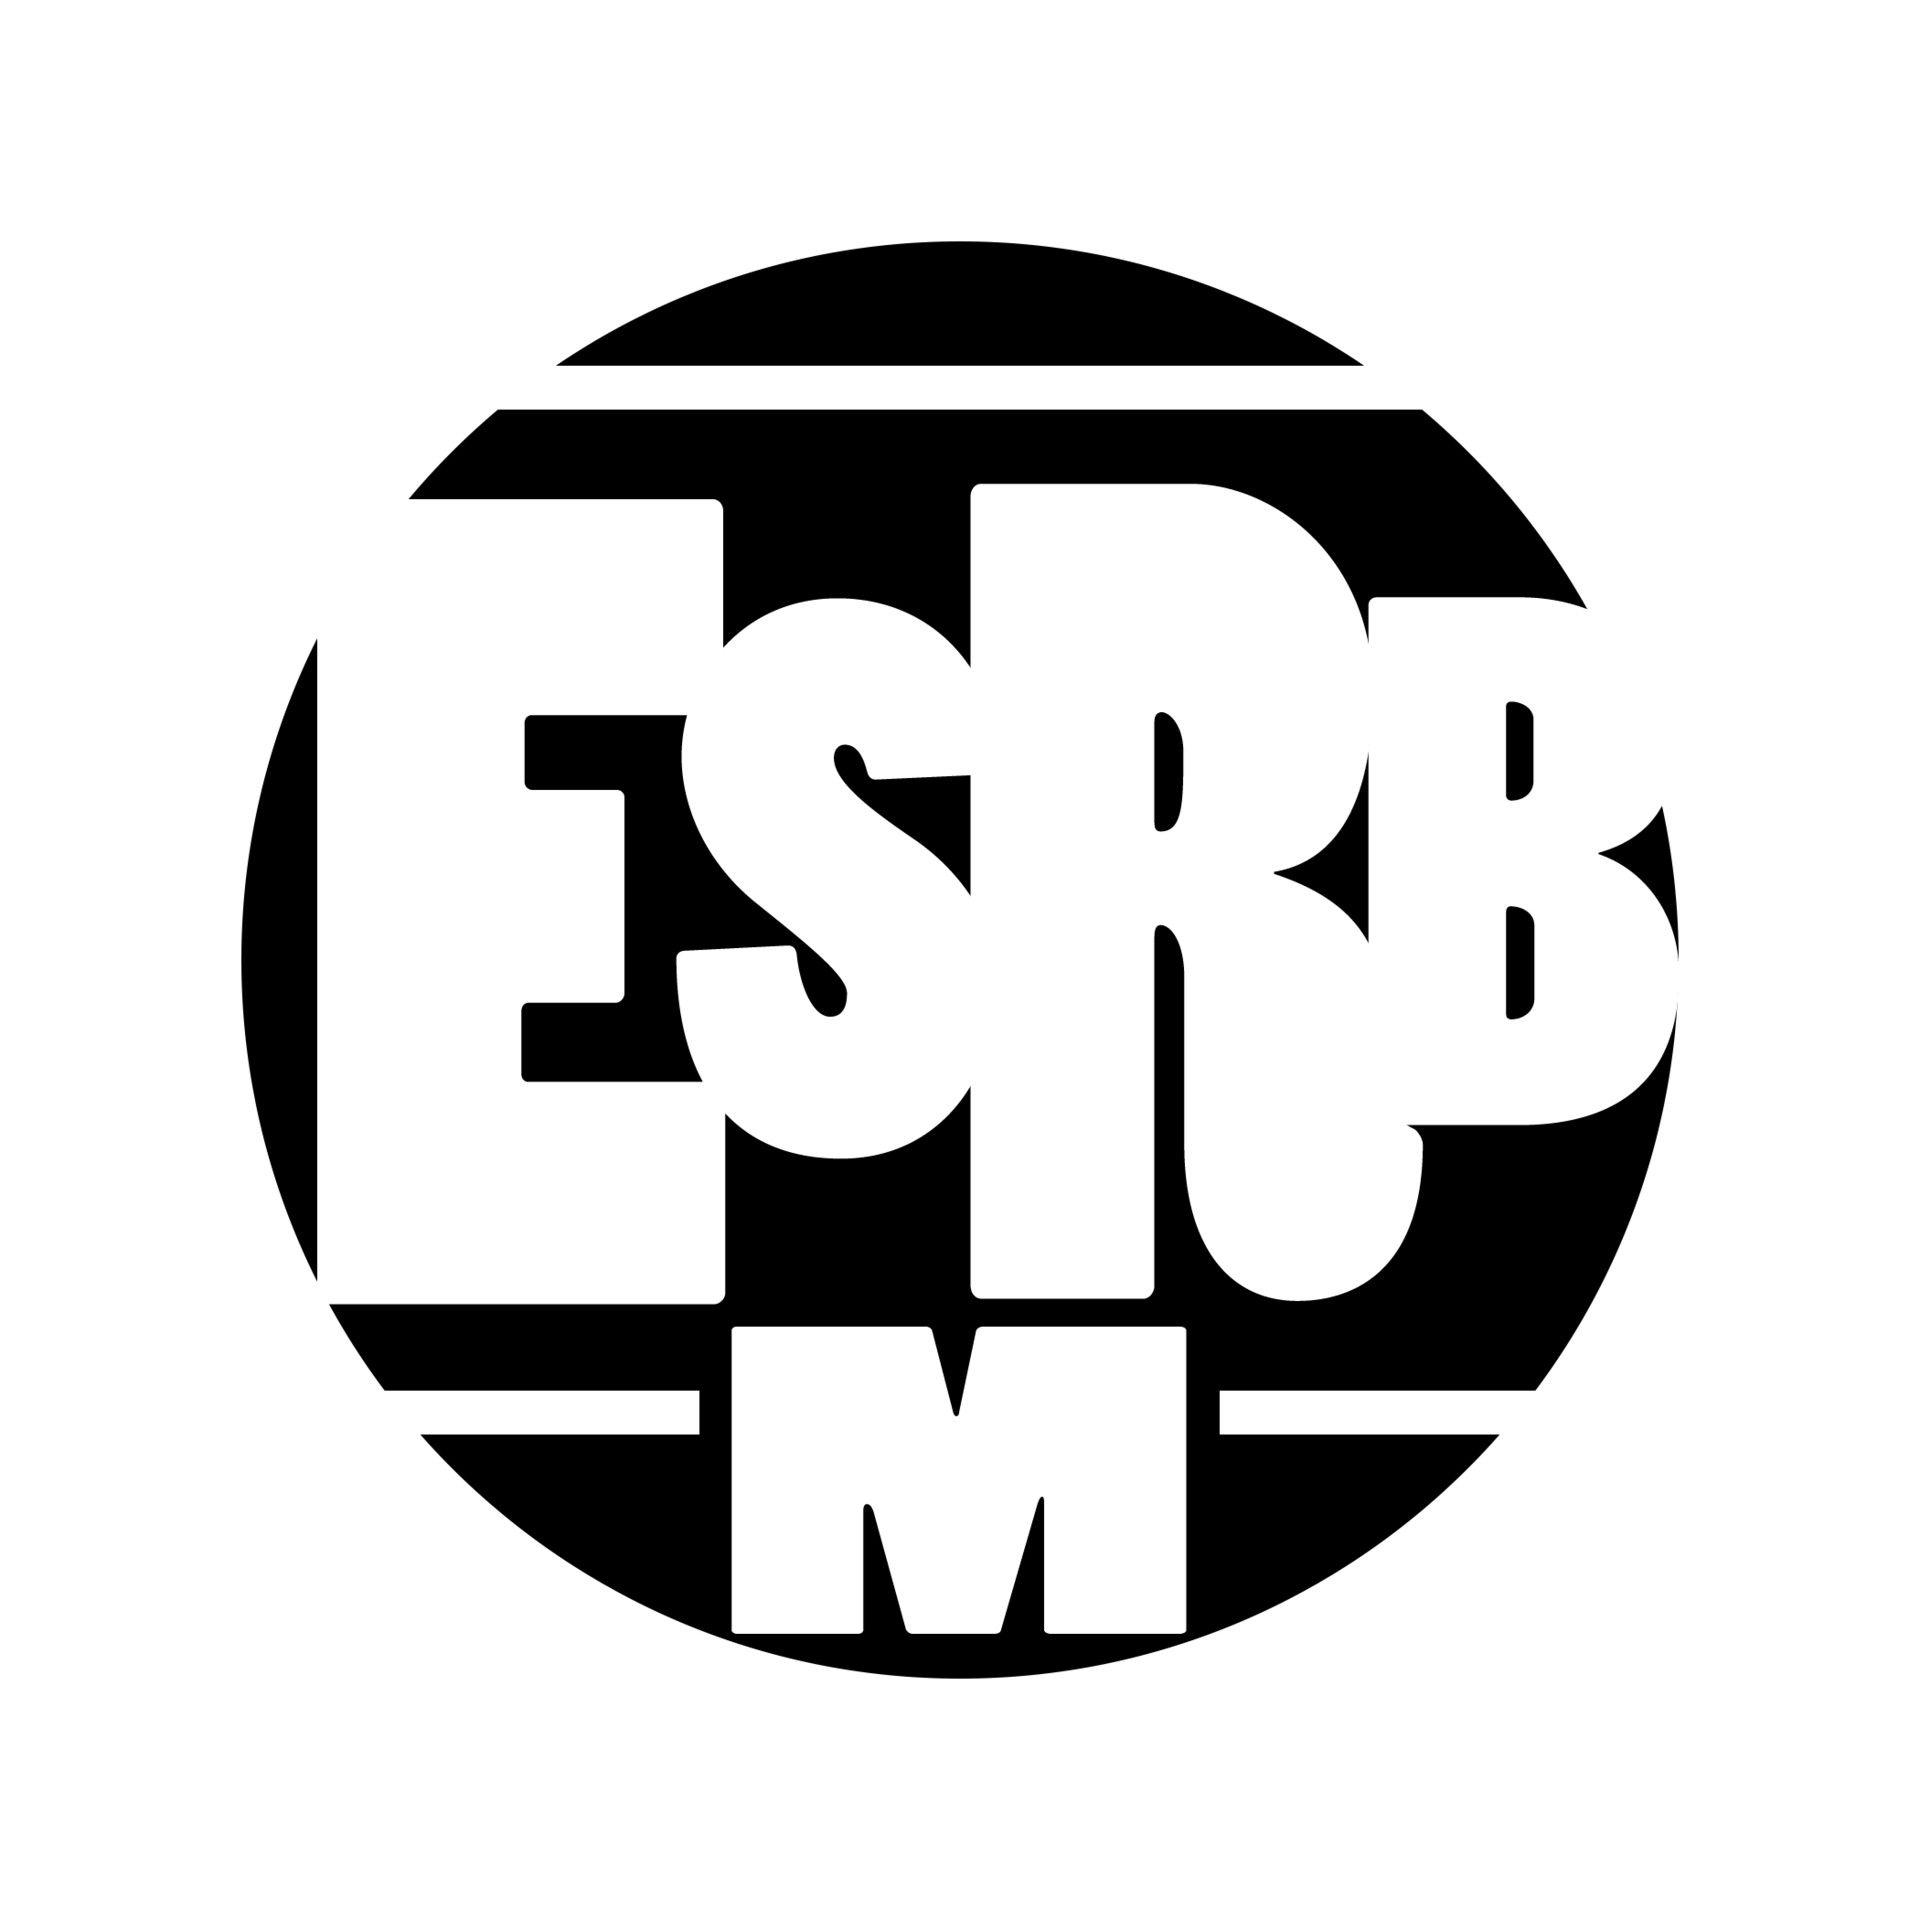 ESRB Logo - ArtStation - ESRB Logo Redesign, Jolie M